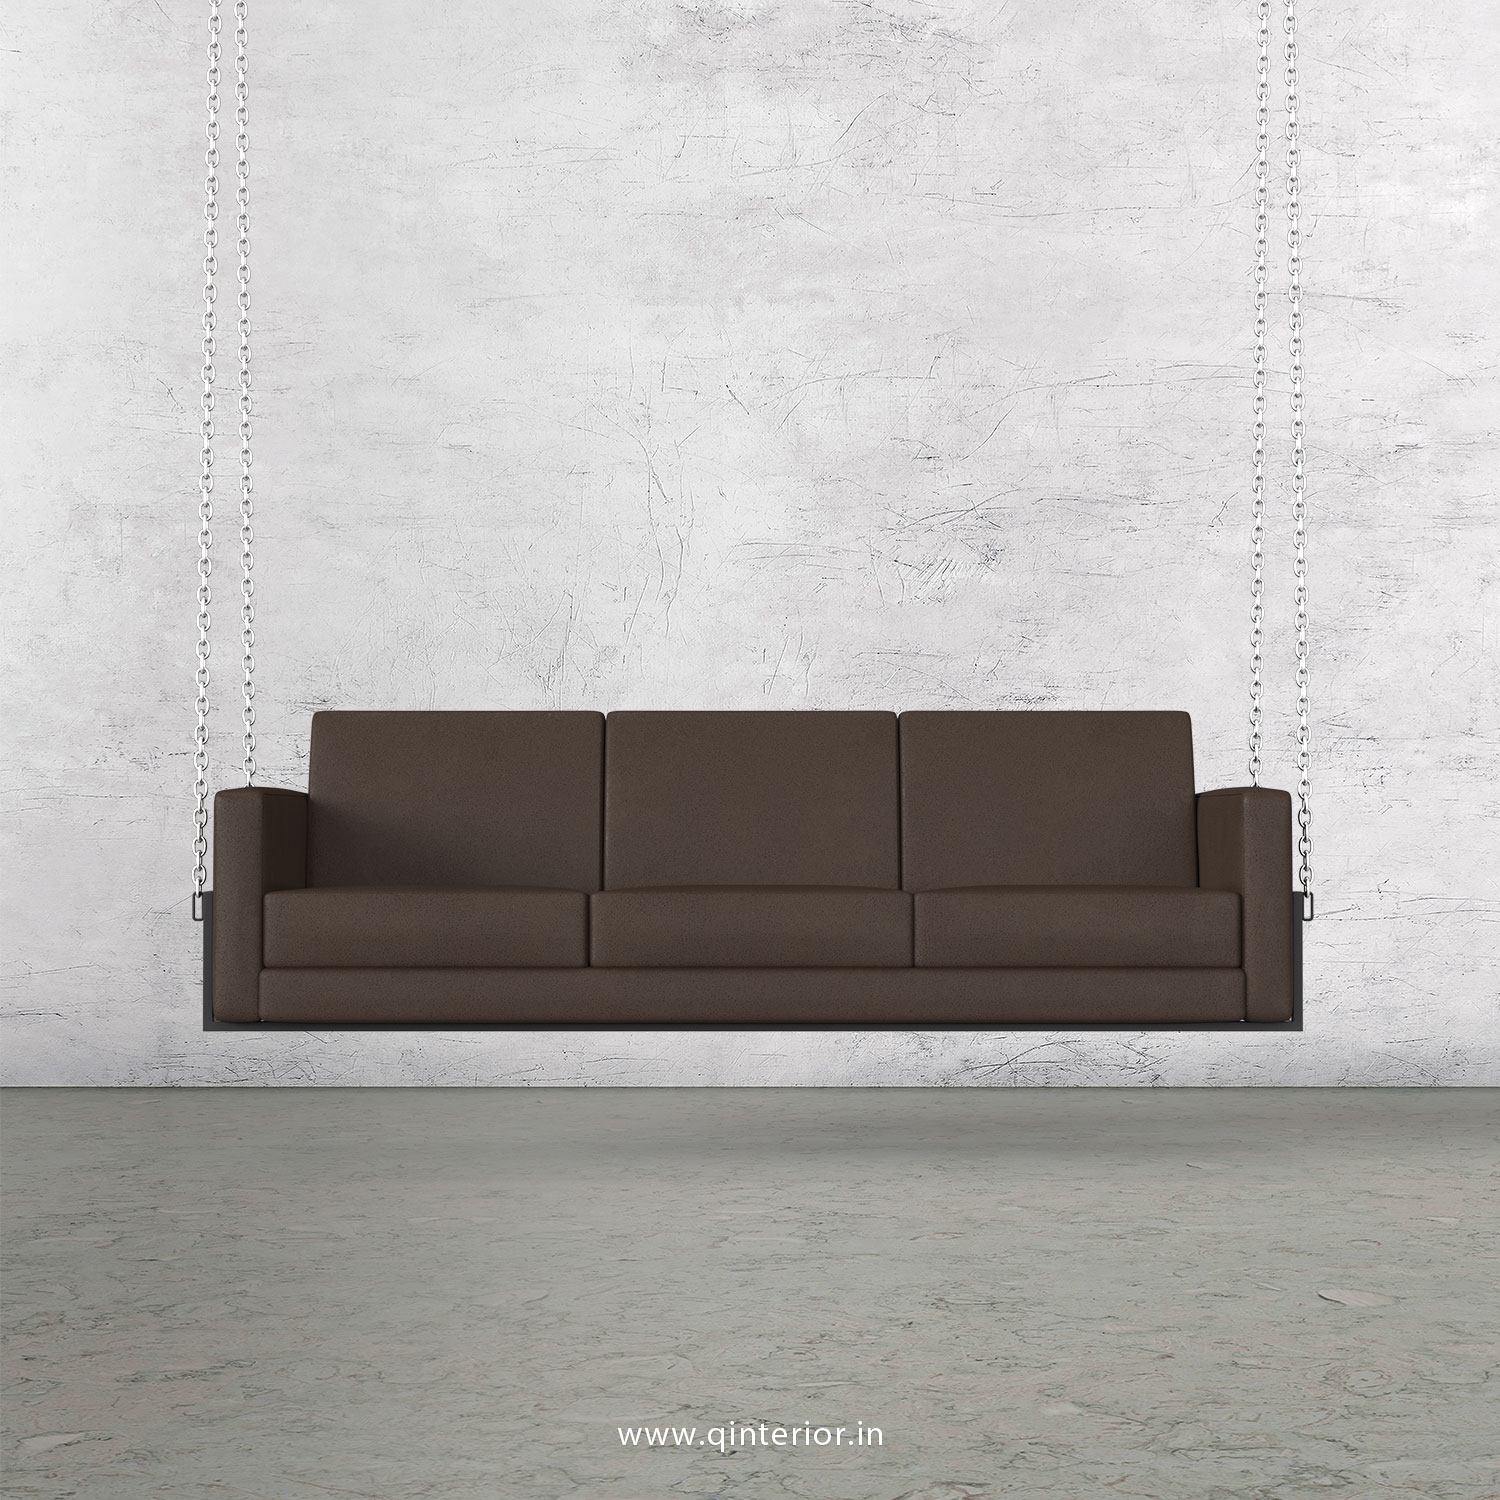 NIRVANA 3 Seater Swing Sofa in Fab Leather Fabric - SSF001 FL16